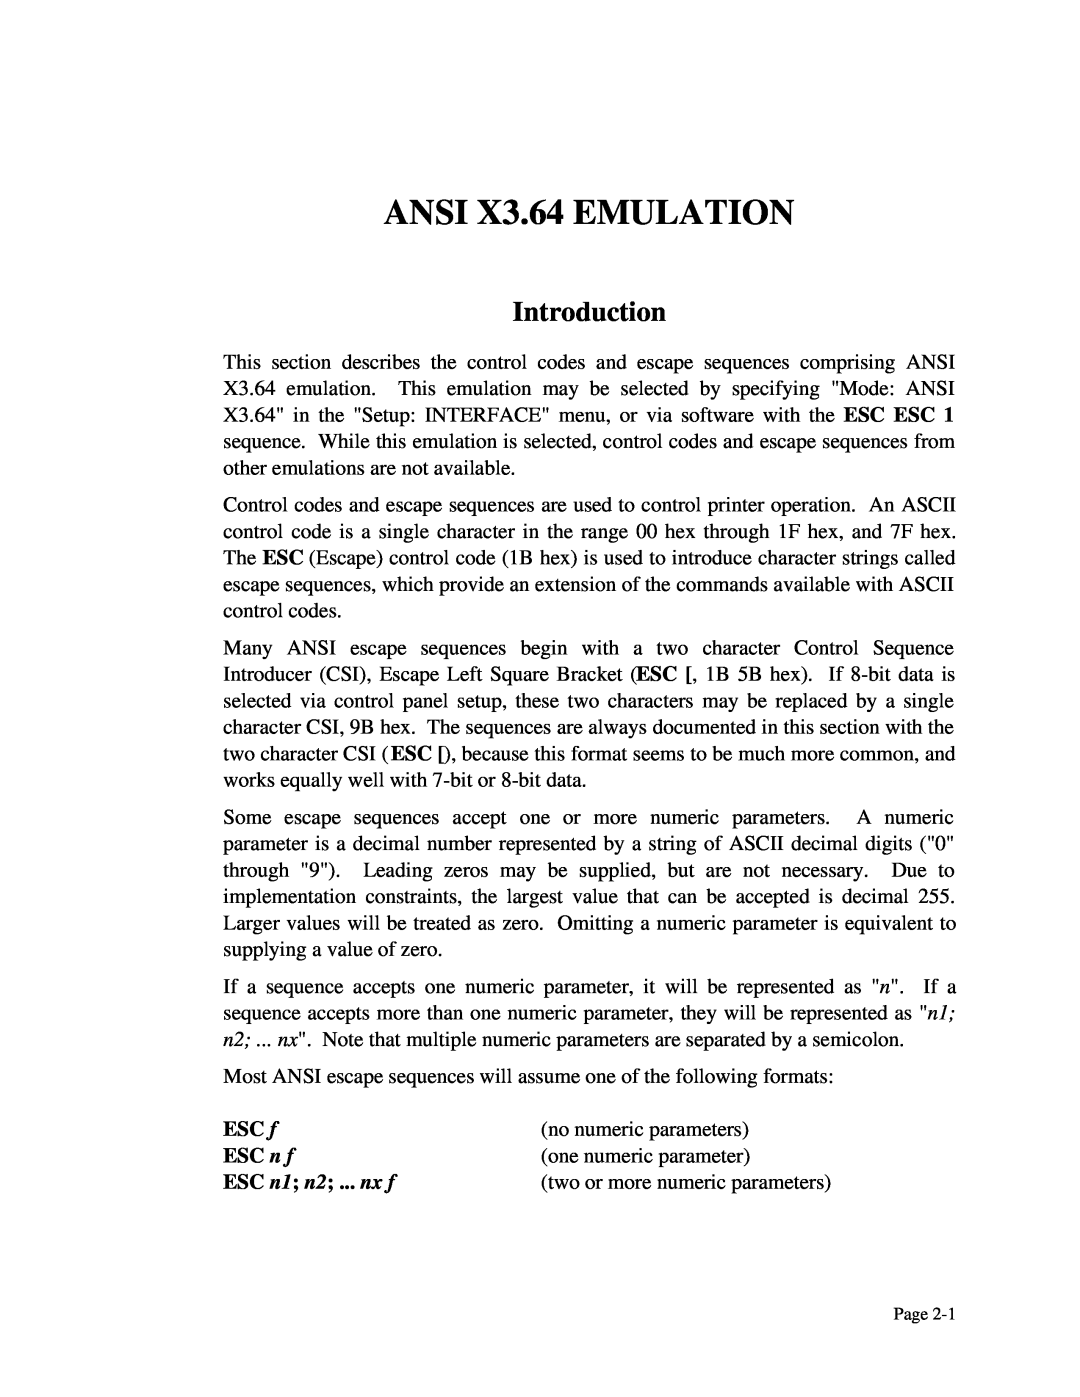 Printek 4300, 4503, 4500 manual ANSI X3.64 EMULATION, Introduction 